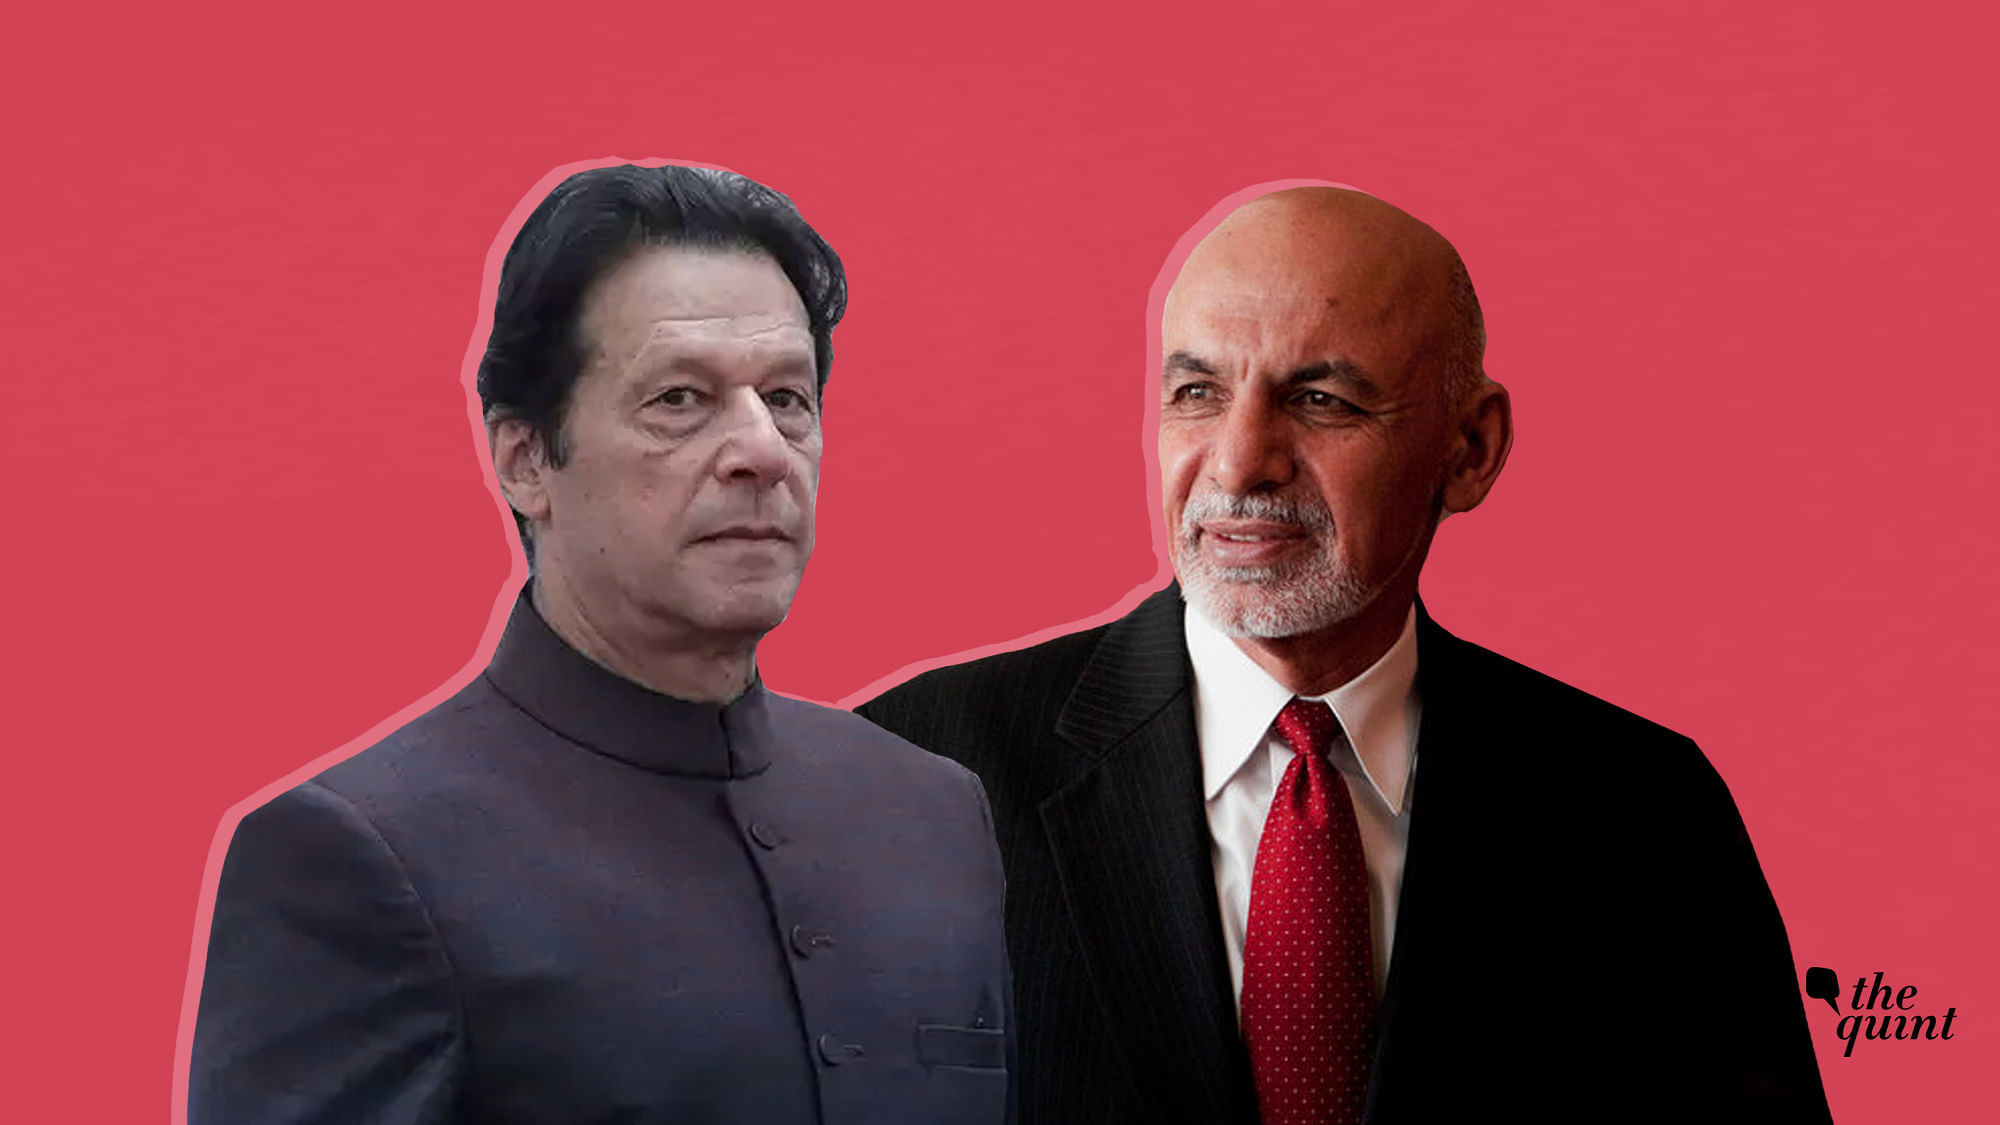 Image of Pakistan PM Imran Khan (L) and Afghanistan President Ashraf Ghani (R) used for representational purposes.